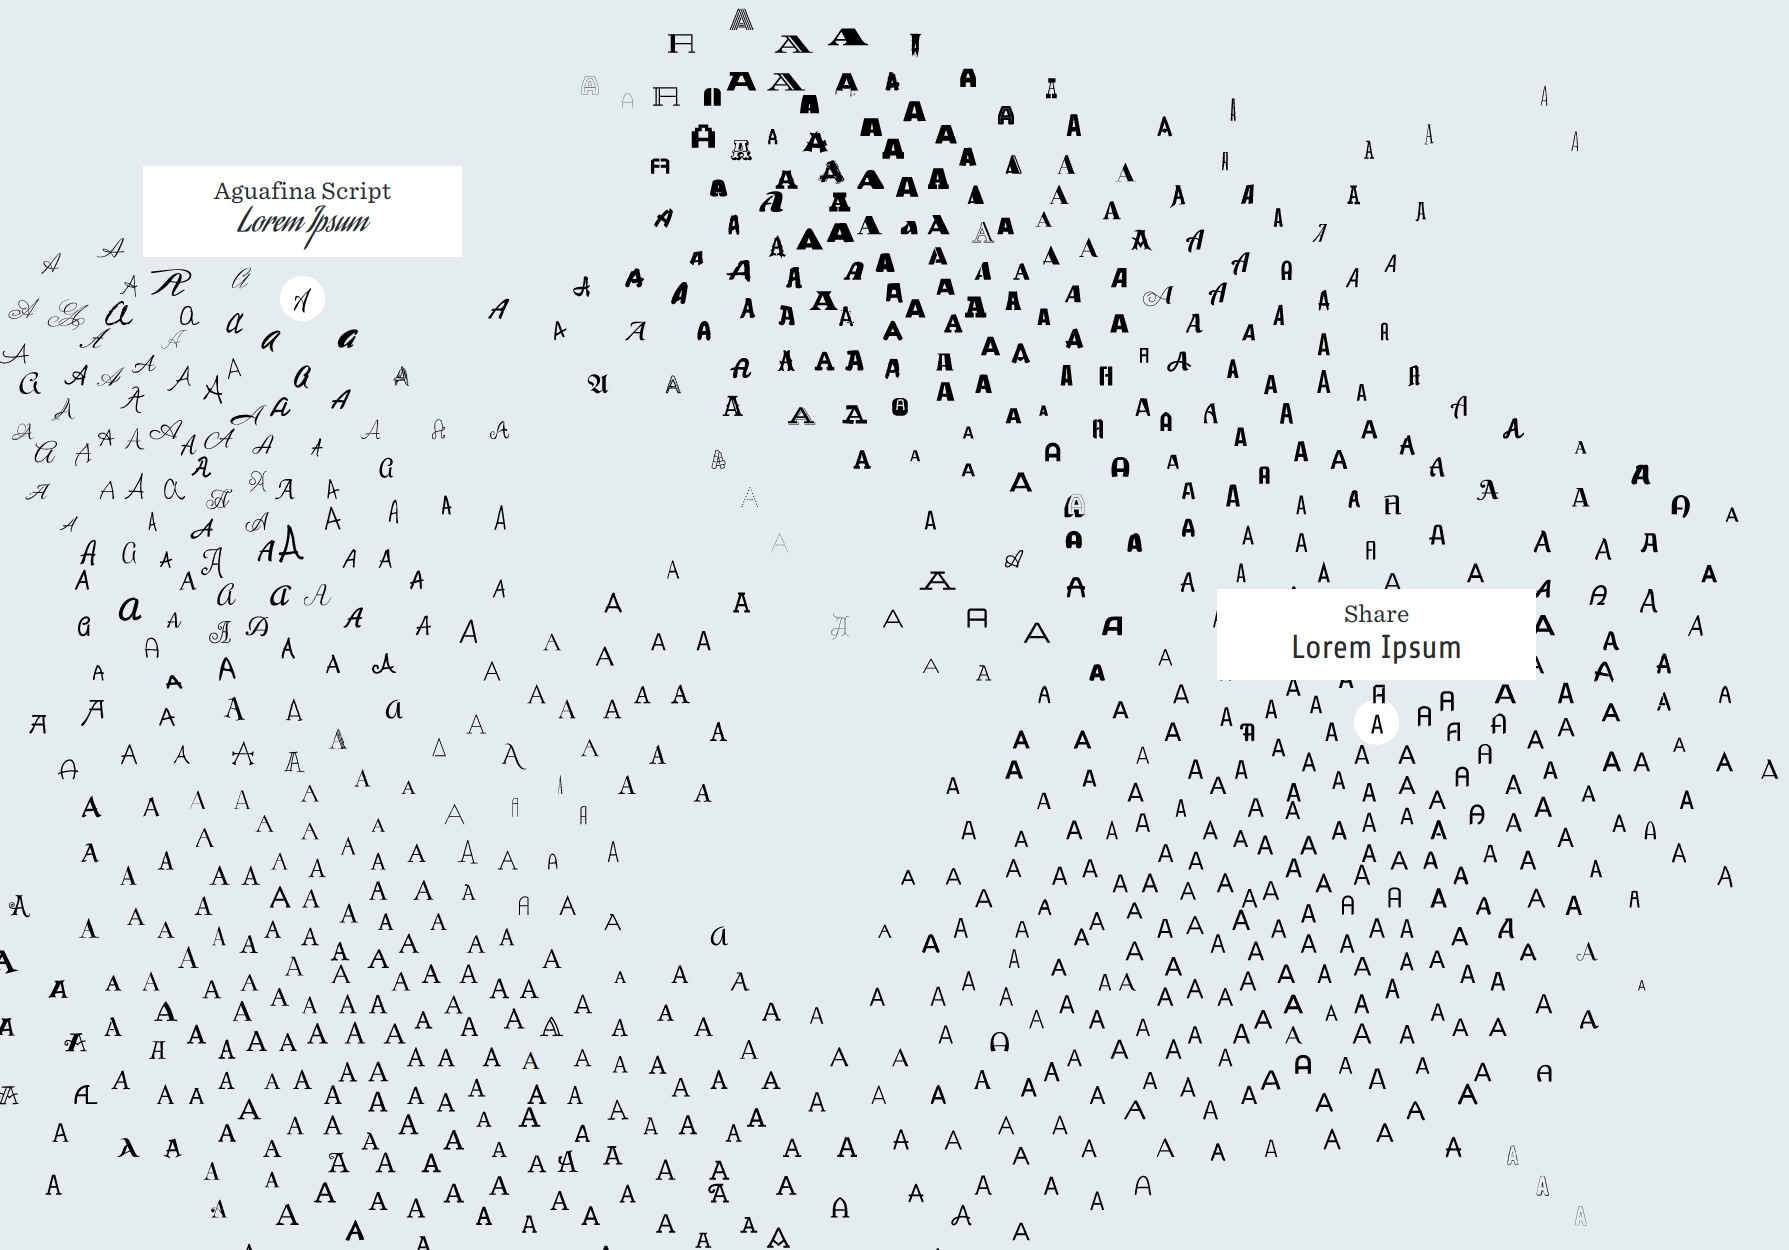 Fontmap: Organizing fonts in 2D map